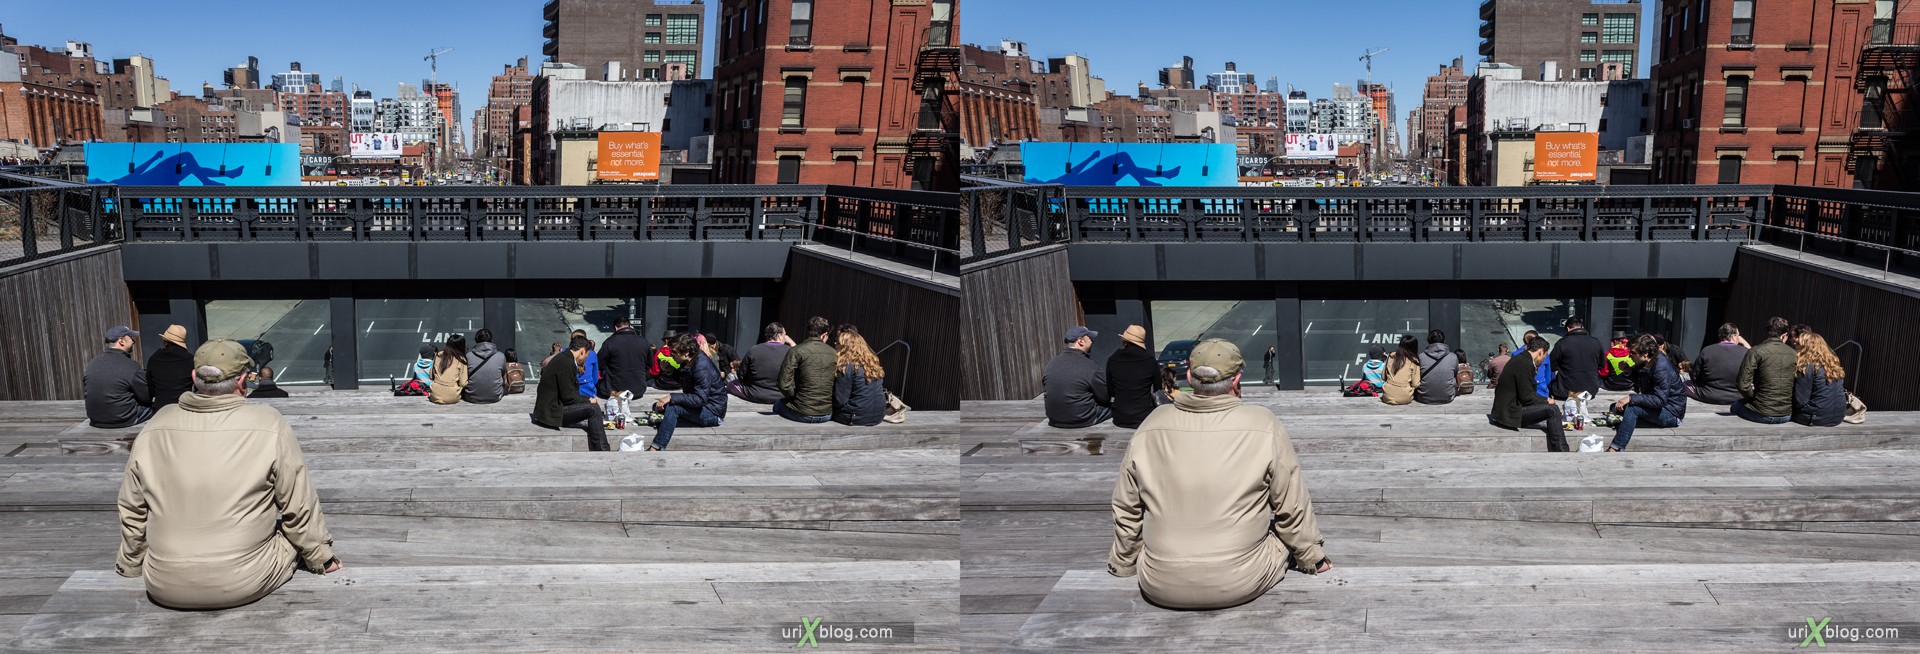 2013, High Line, park, railway, people, NYC, New York, Manhattan, USA, 3D, stereo pair, cross-eyed, crossview, cross view stereo pair, stereoscopic